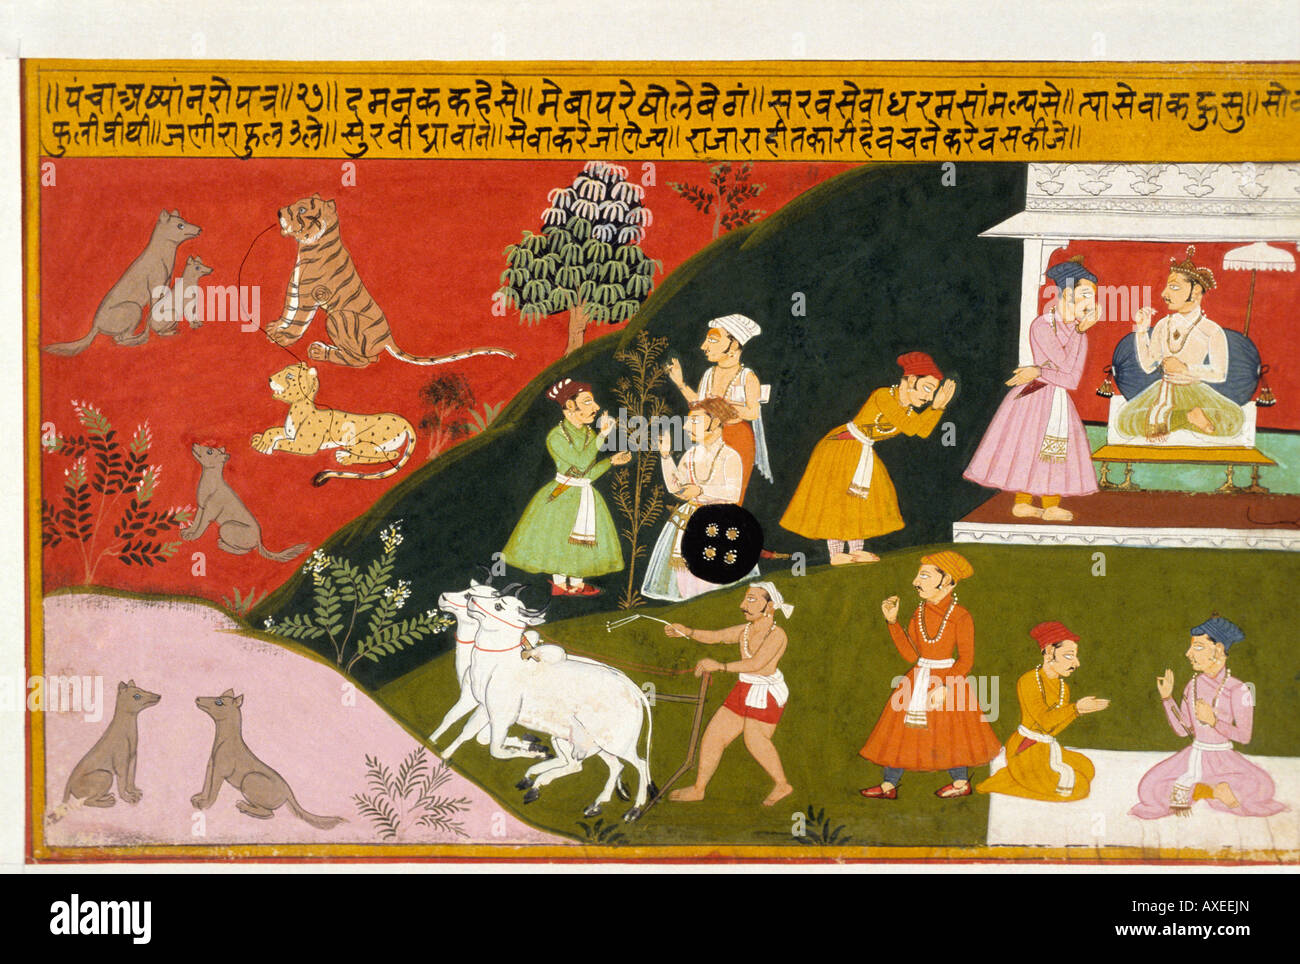 Damnka Découvrir c 1700 kanoria. Peinture miniature indienne de Mewar Rajasthan, Inde Banque D'Images